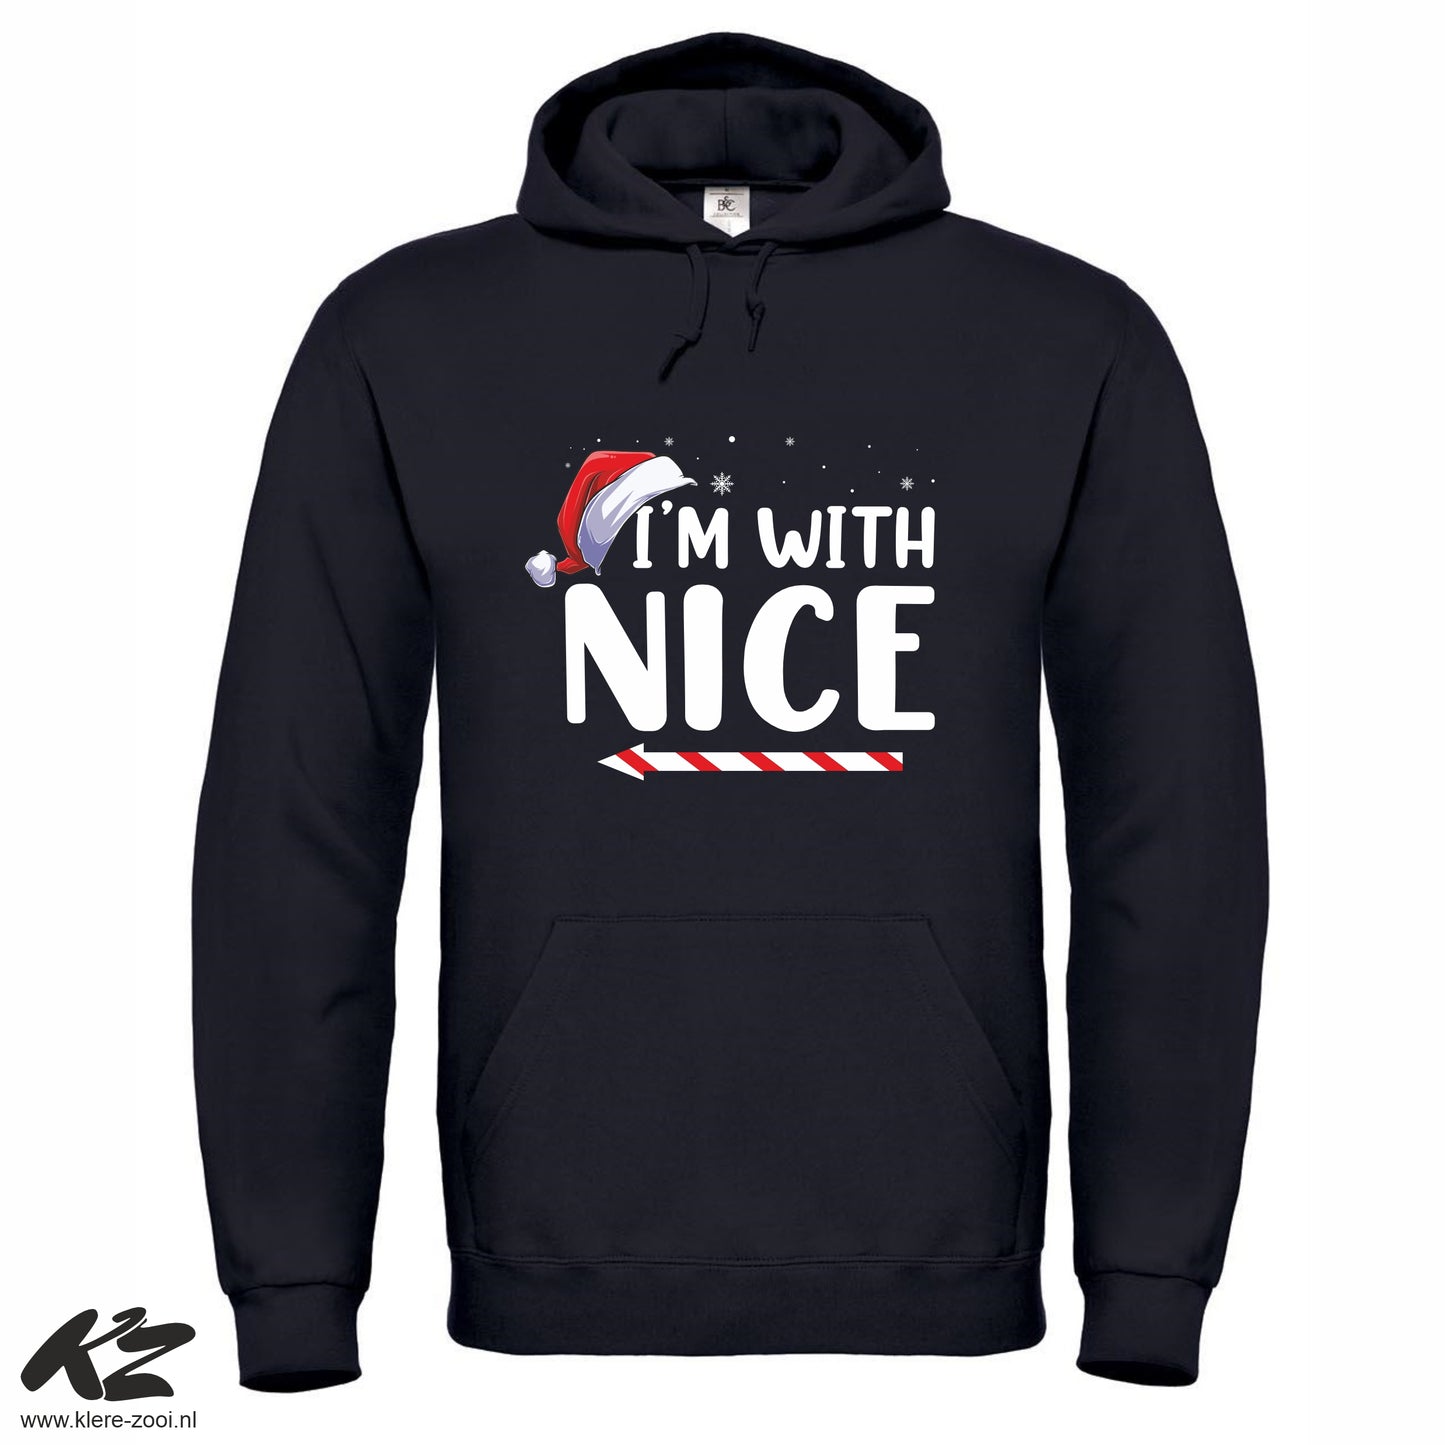 I'm with Nice